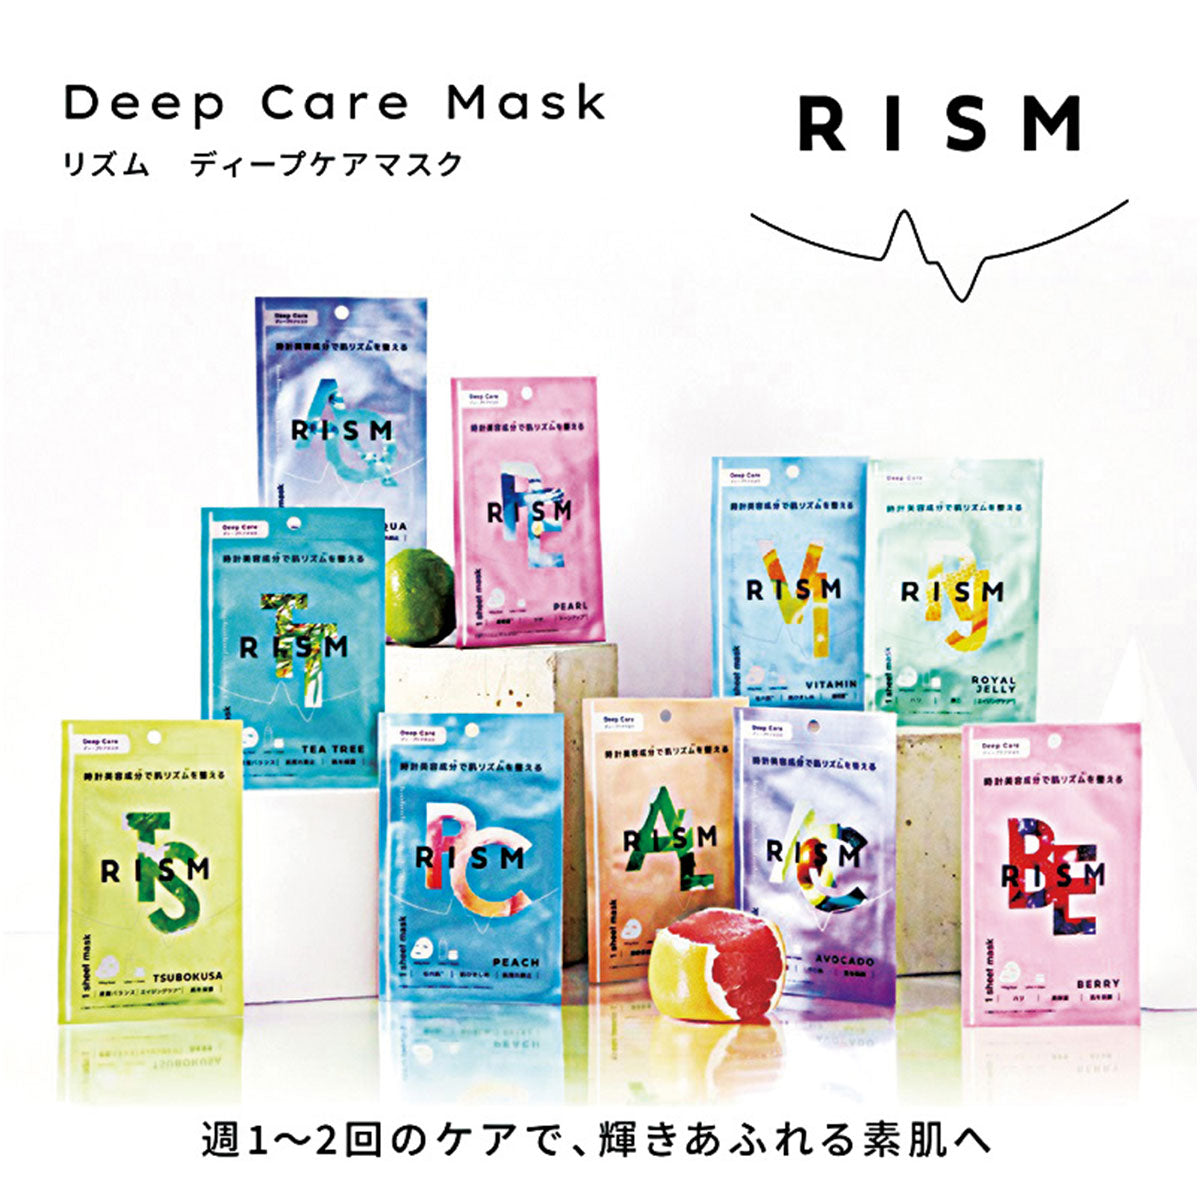 Deep Care Mask Centella Asiatica-Tsubokusa #Sebum Care 1 Sheet